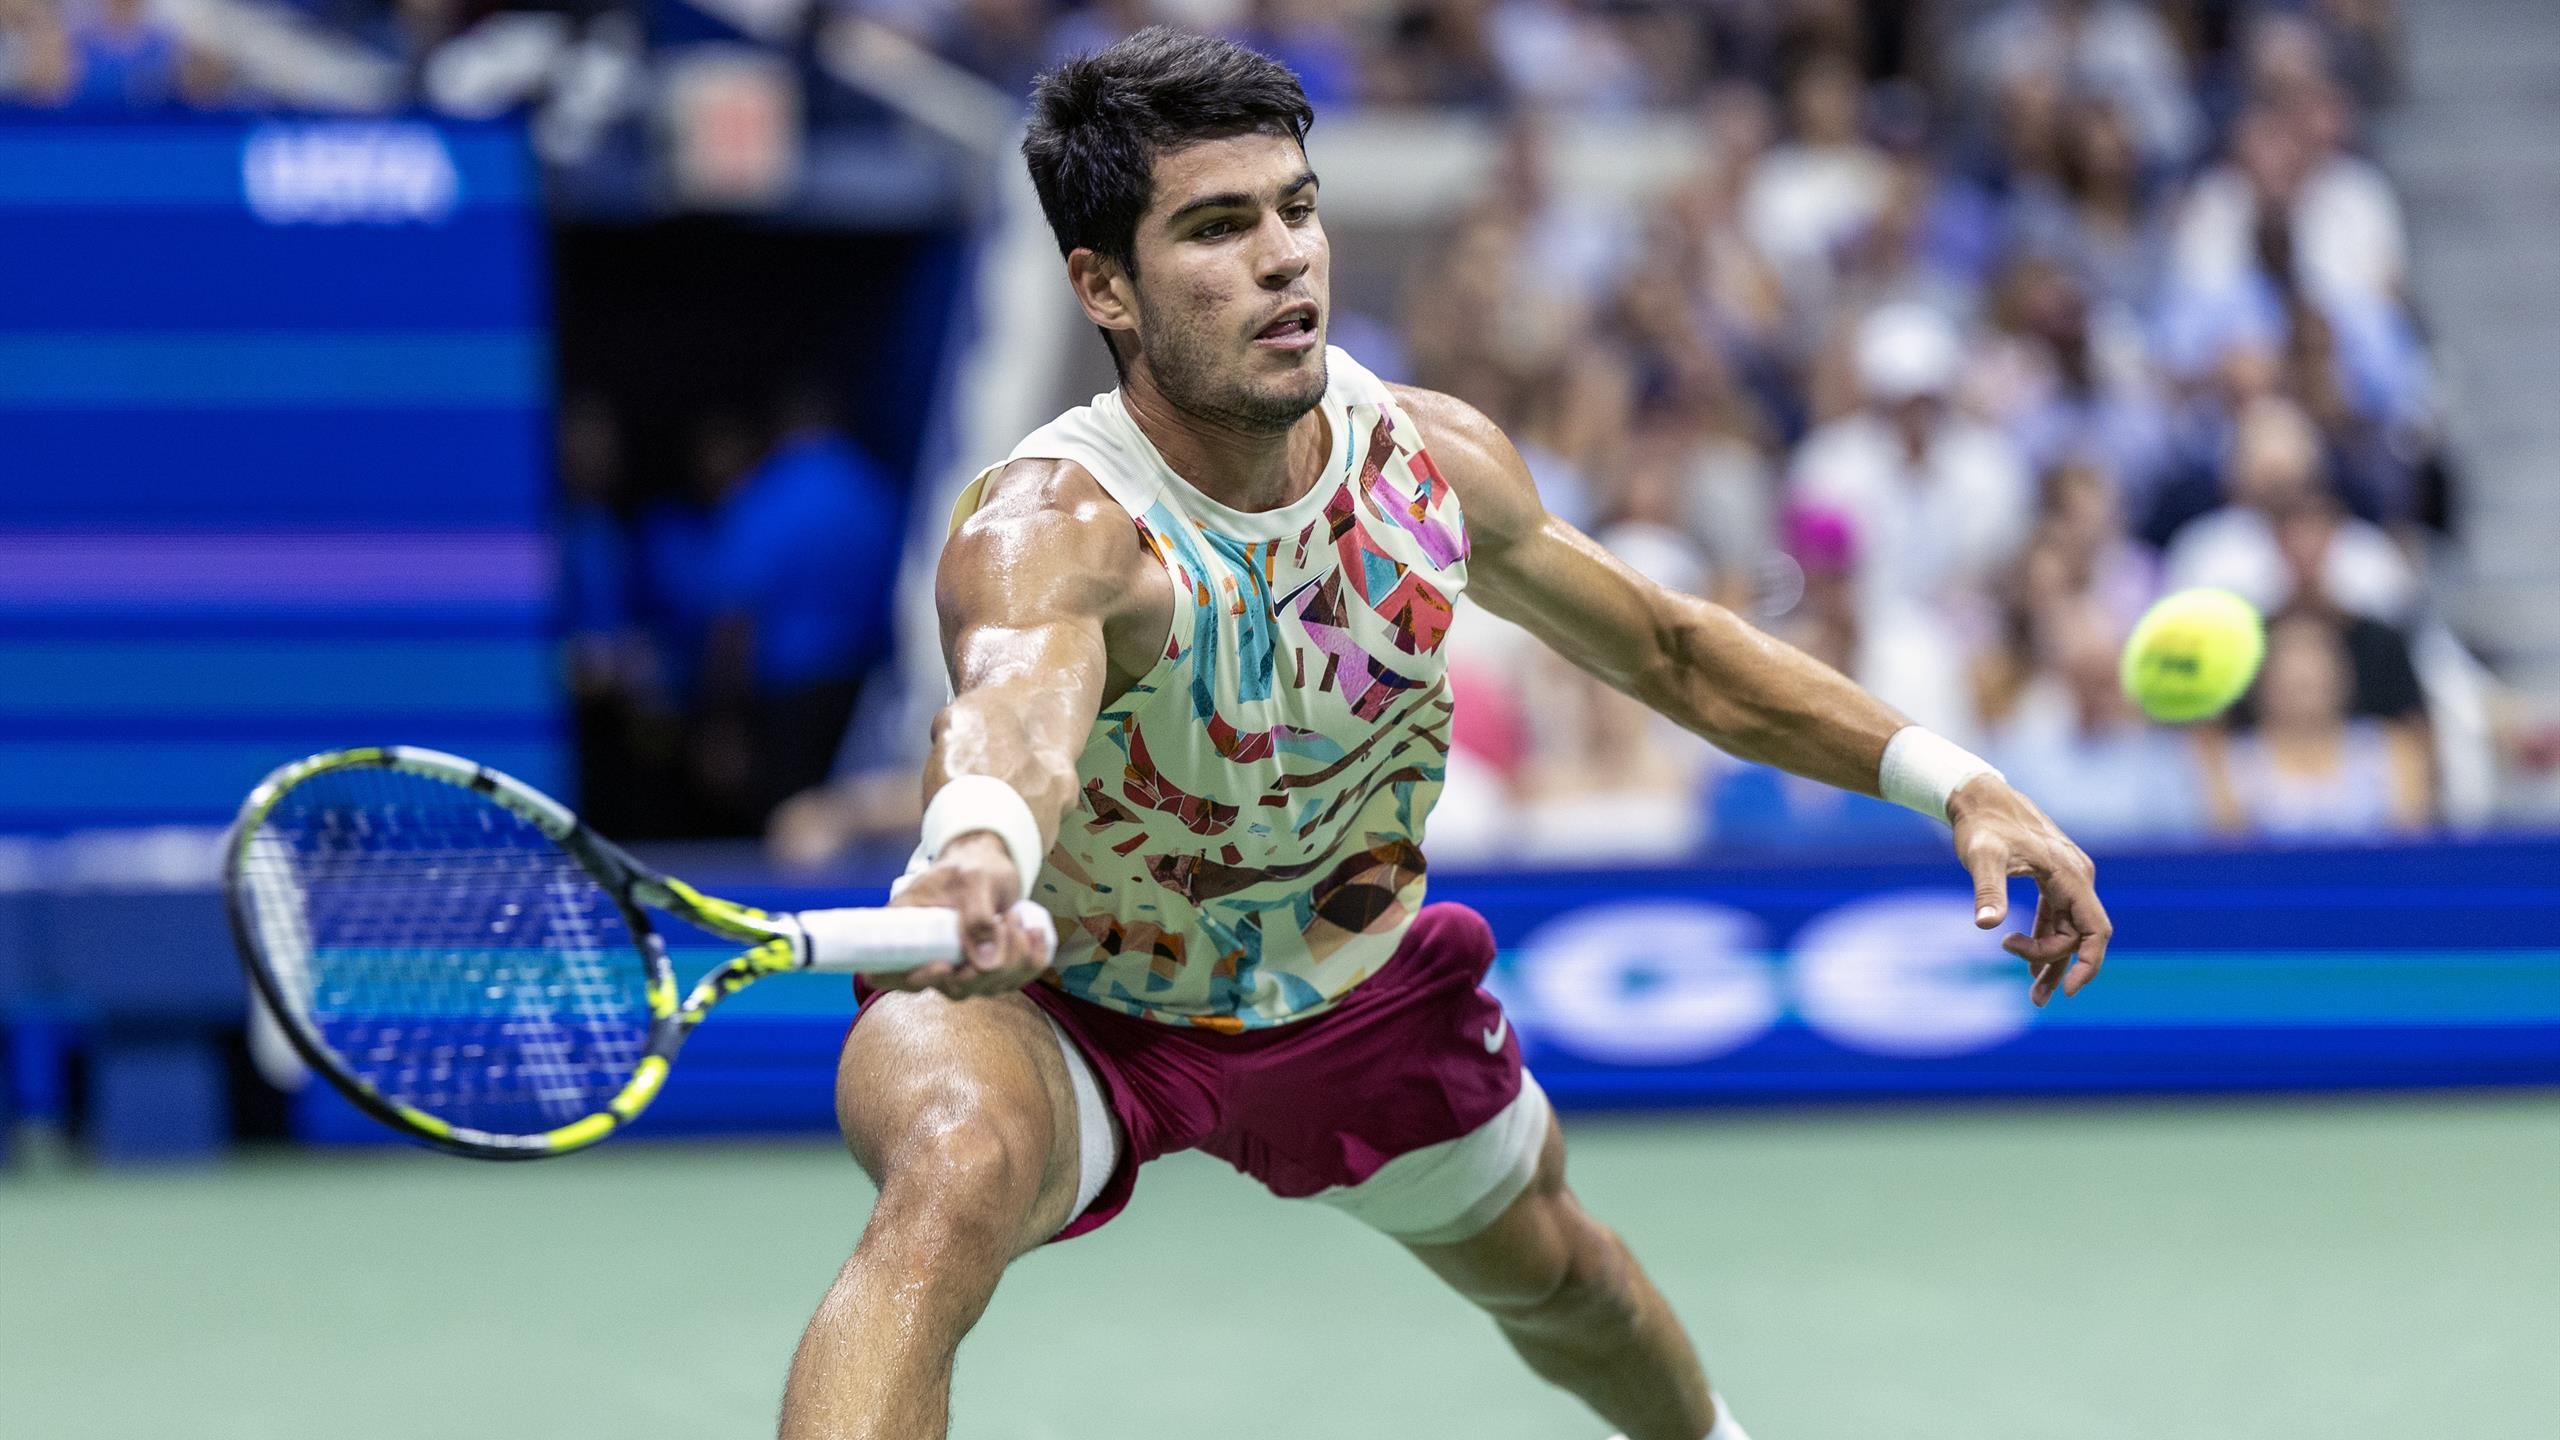 He's a human highlight reel': the star power of tennis player Carlos Alcaraz, Carlos Alcaraz